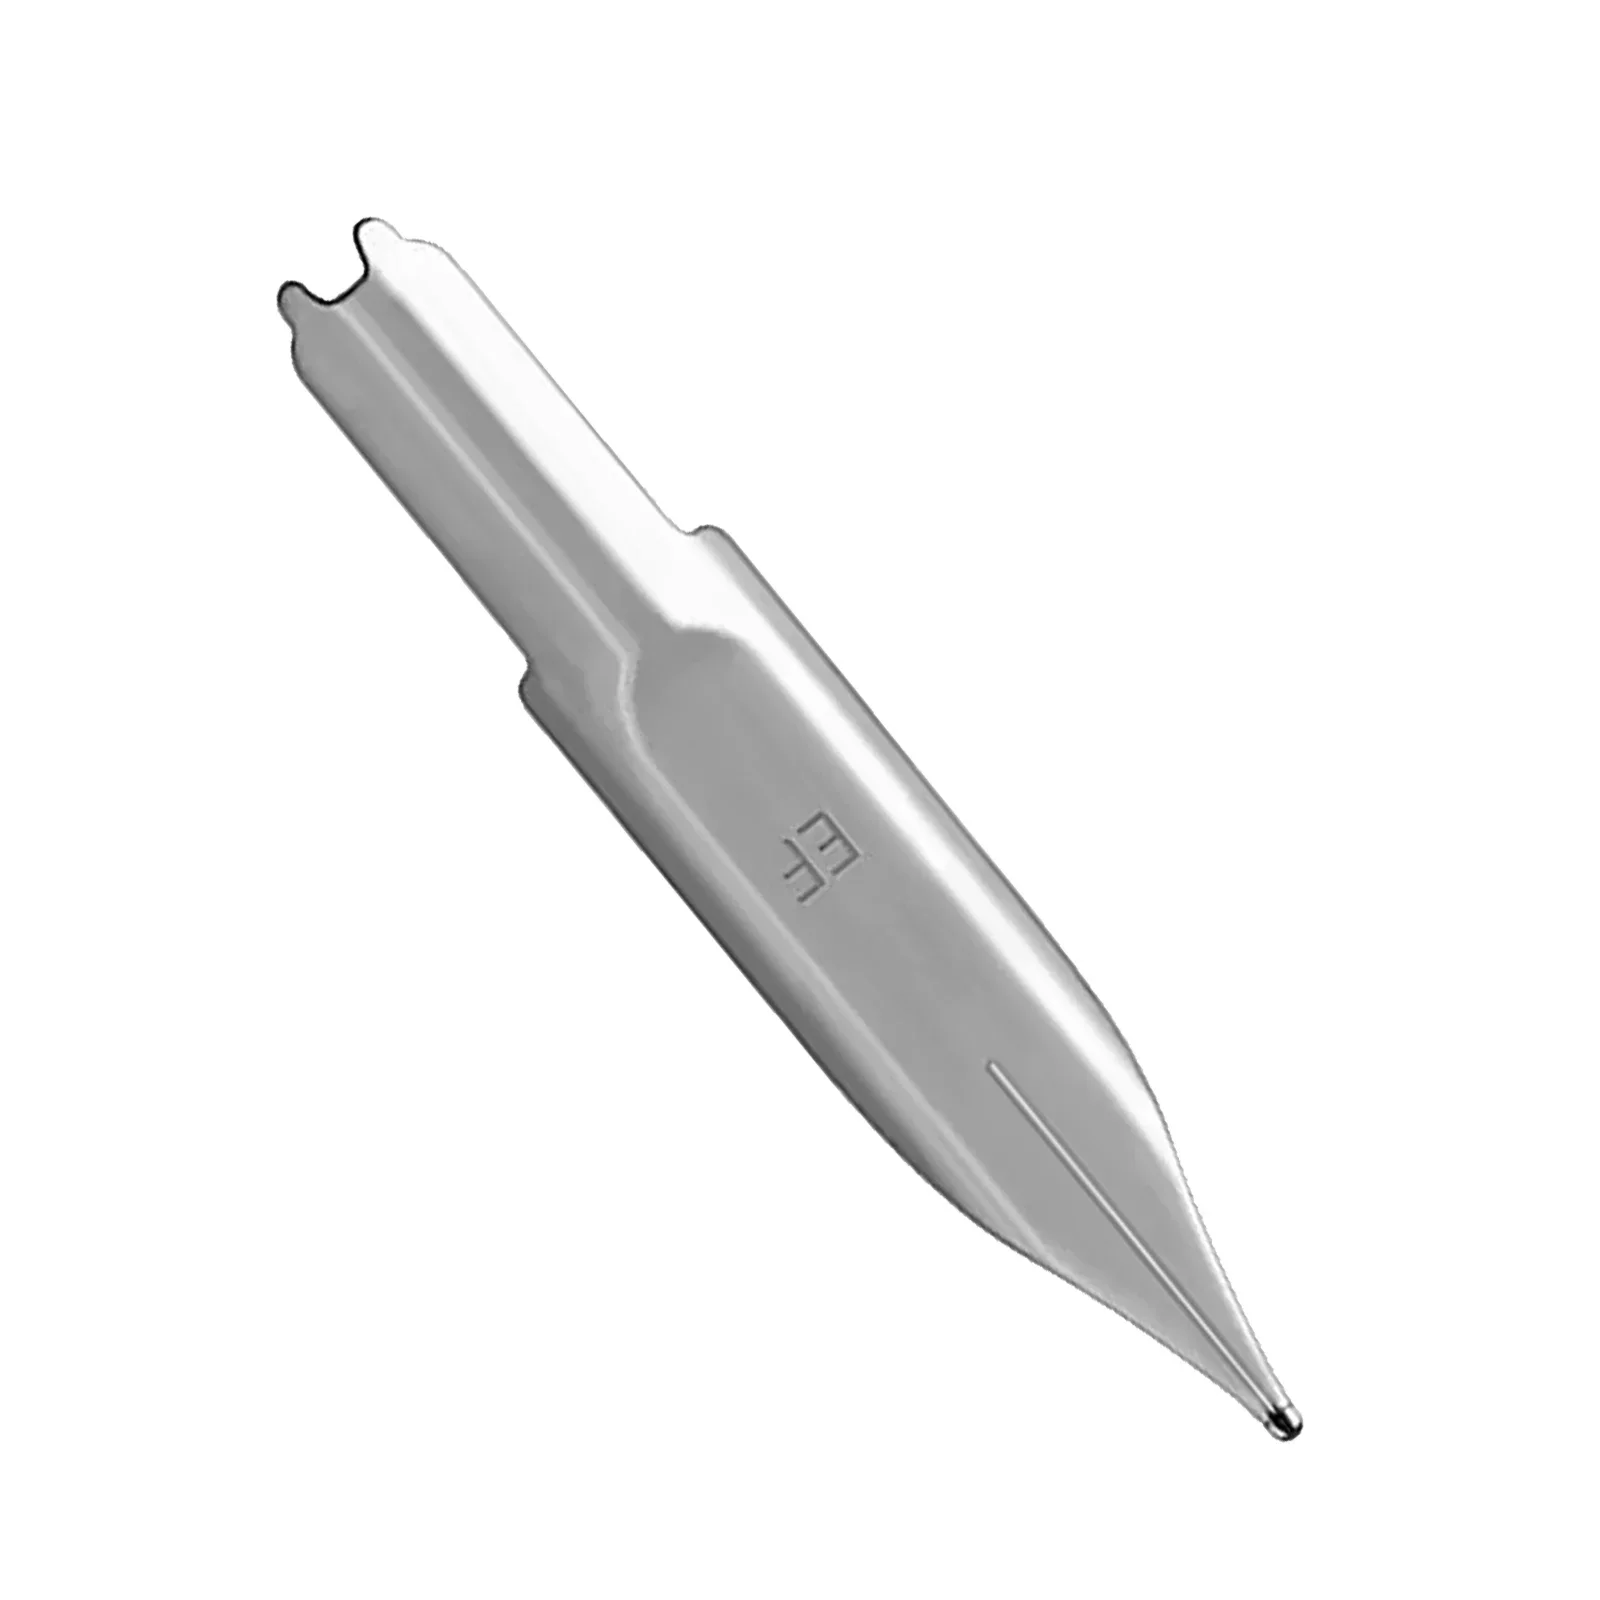 Original Fountain pen Replacement Nib EF Nib 0.4mm nibs for MAJOHN A2 A1 Press Resin Fountain Pens writing supplies stationery